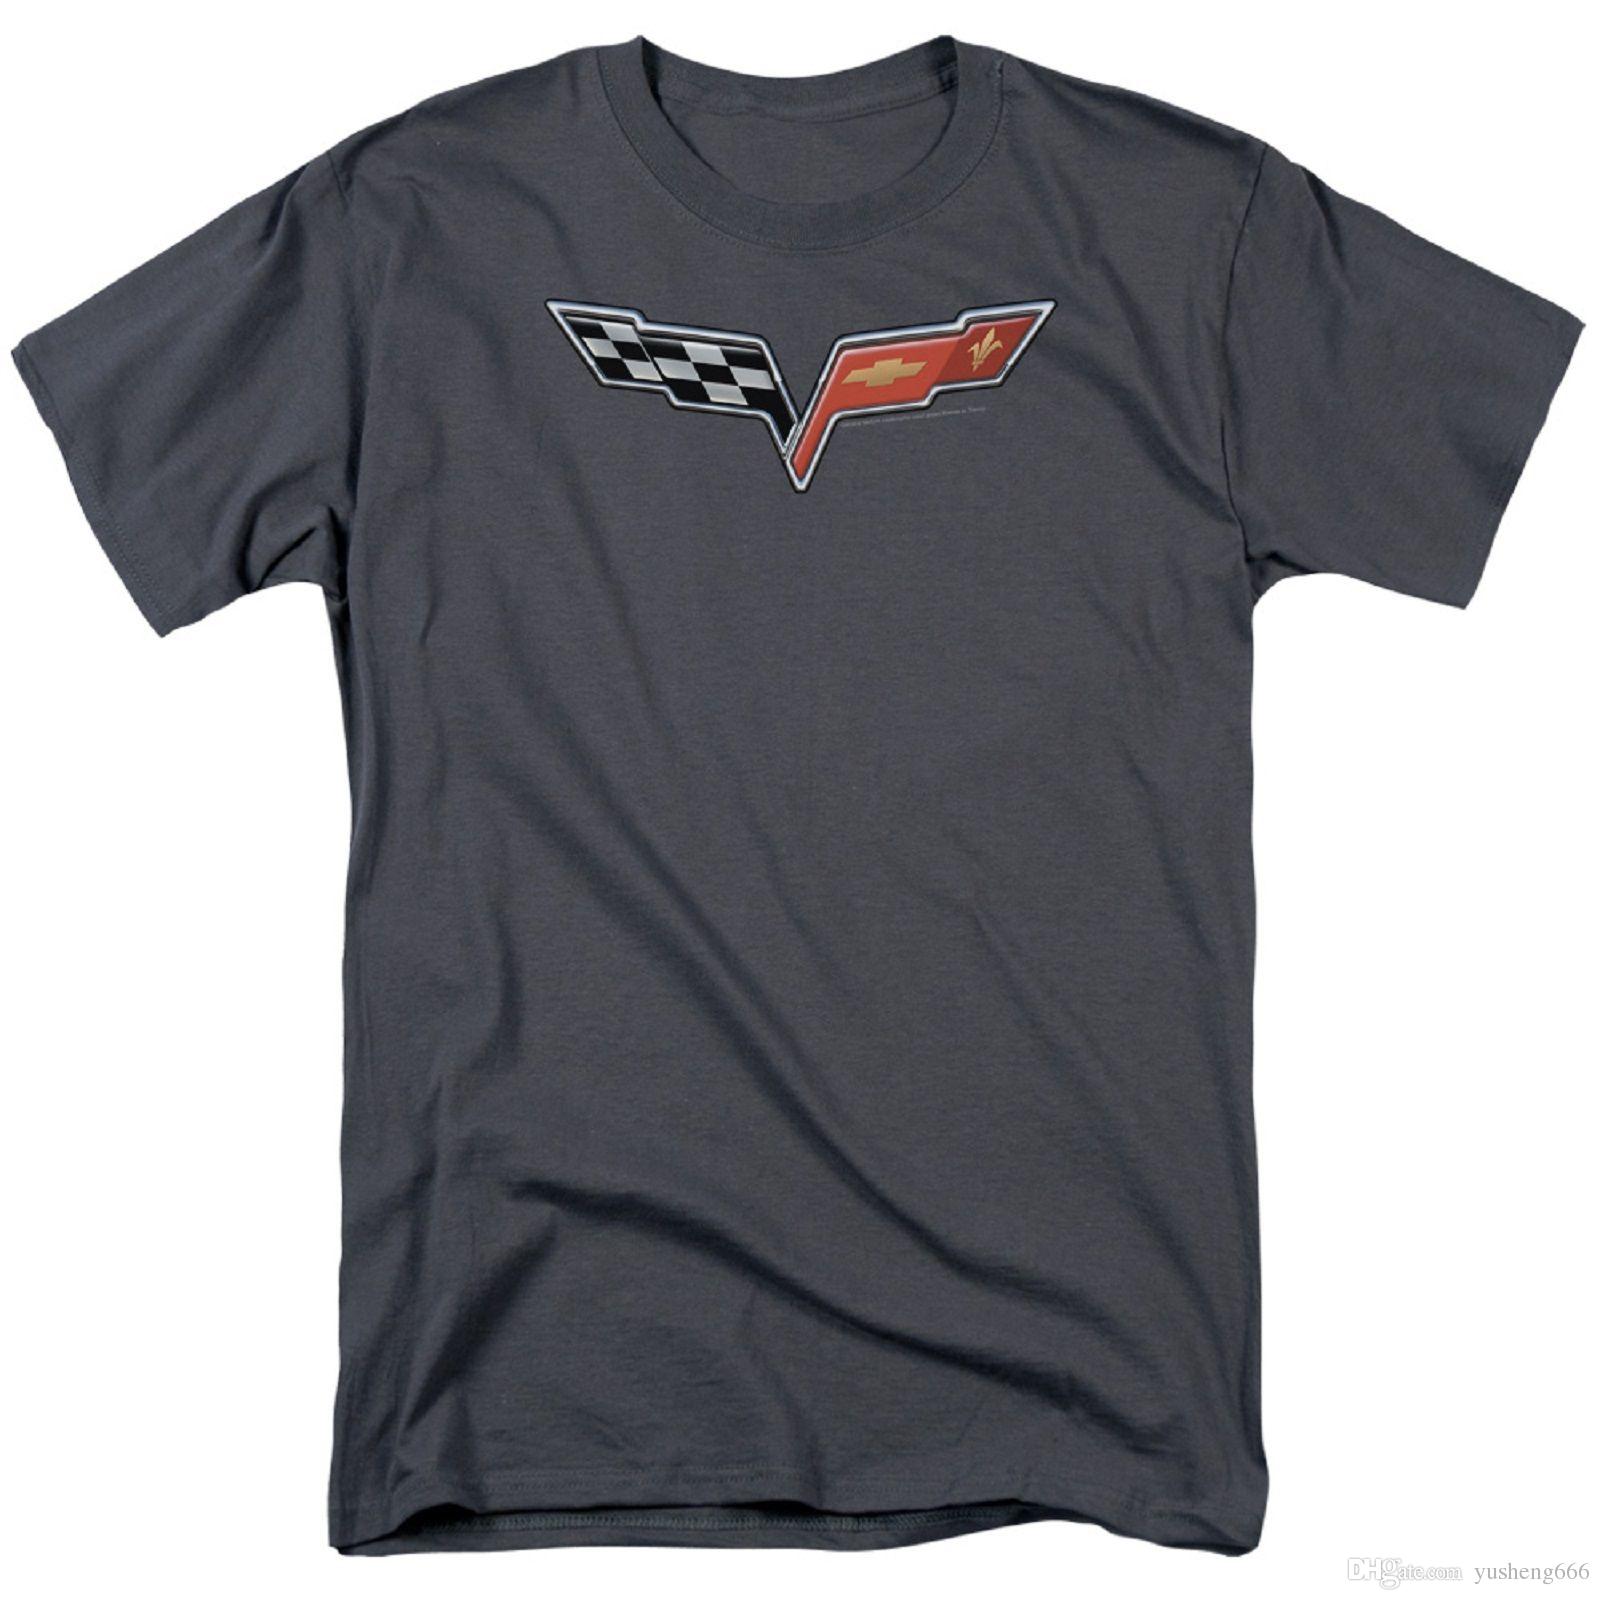 Awesome Corvette Logo - Chevrolet Corvette Flag C6 Logo T Shirt By Trevco Awesome Tee Shirt